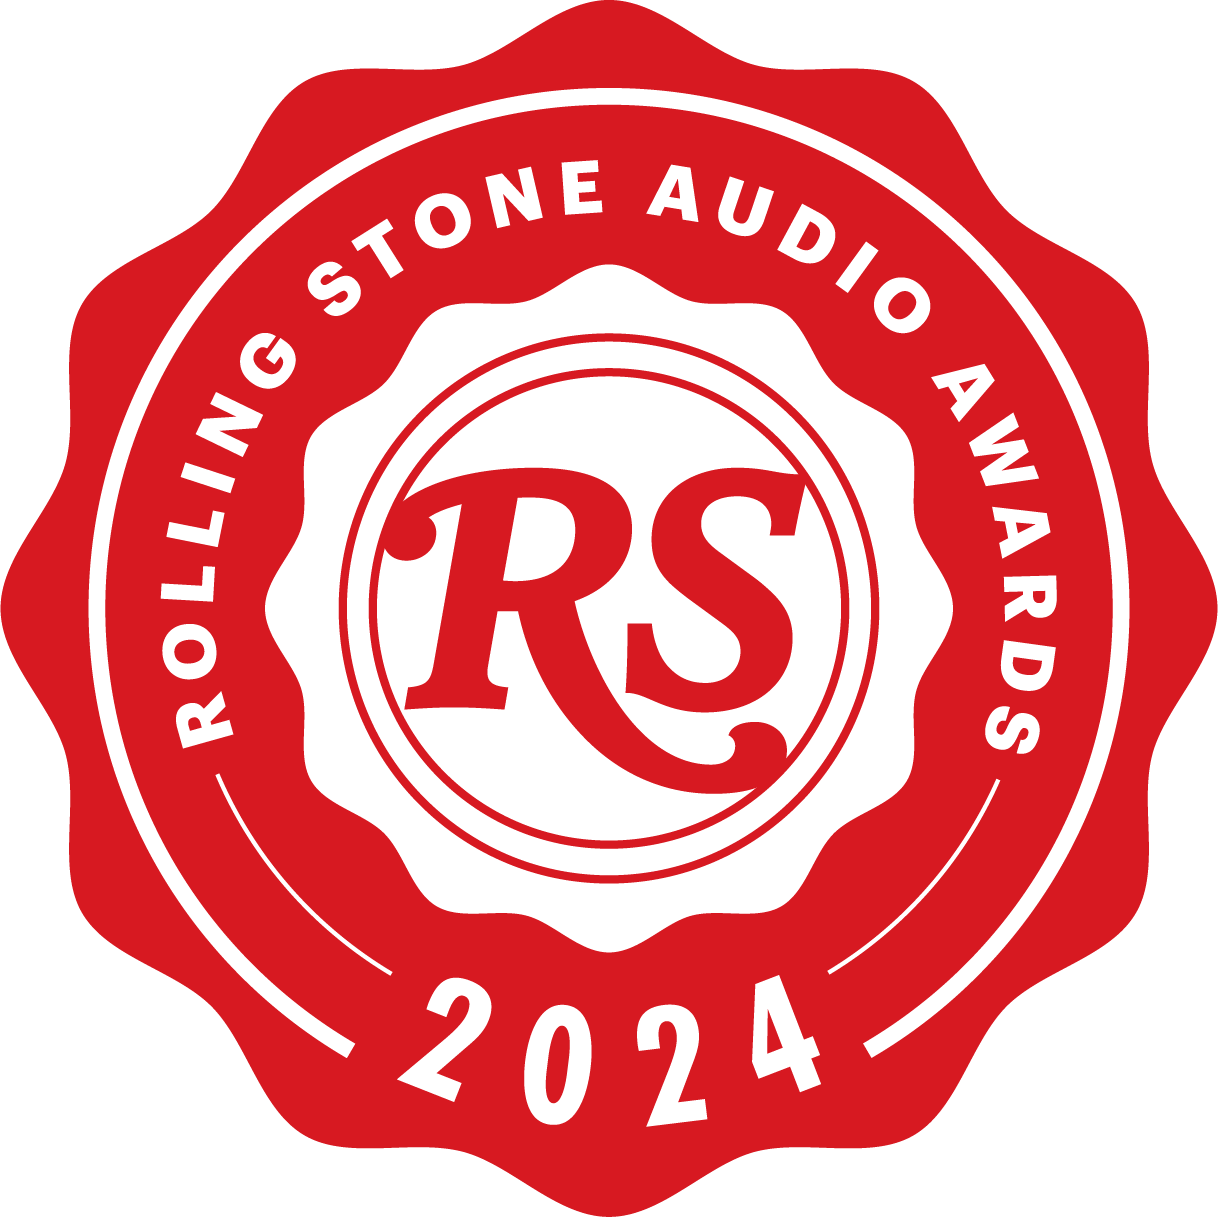 Rolling stone awards